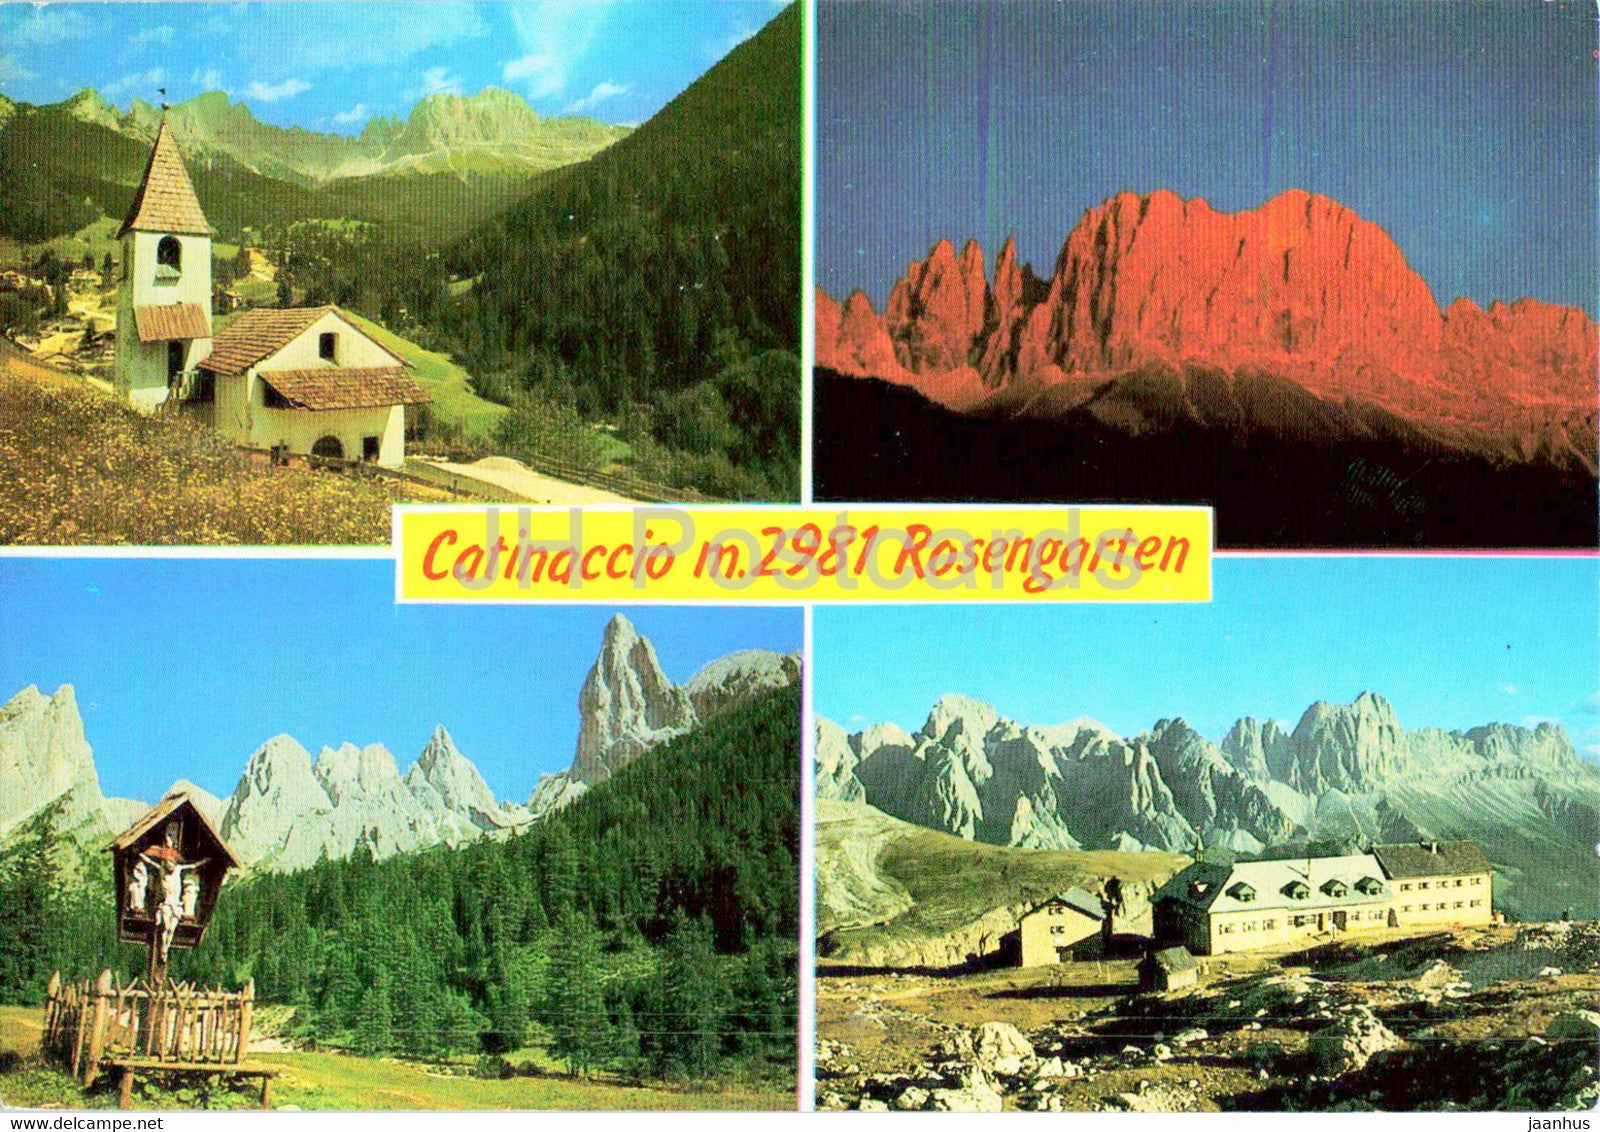 Catinaccio 2981 m Rosengarten - 1993 - Italy - used - JH Postcards